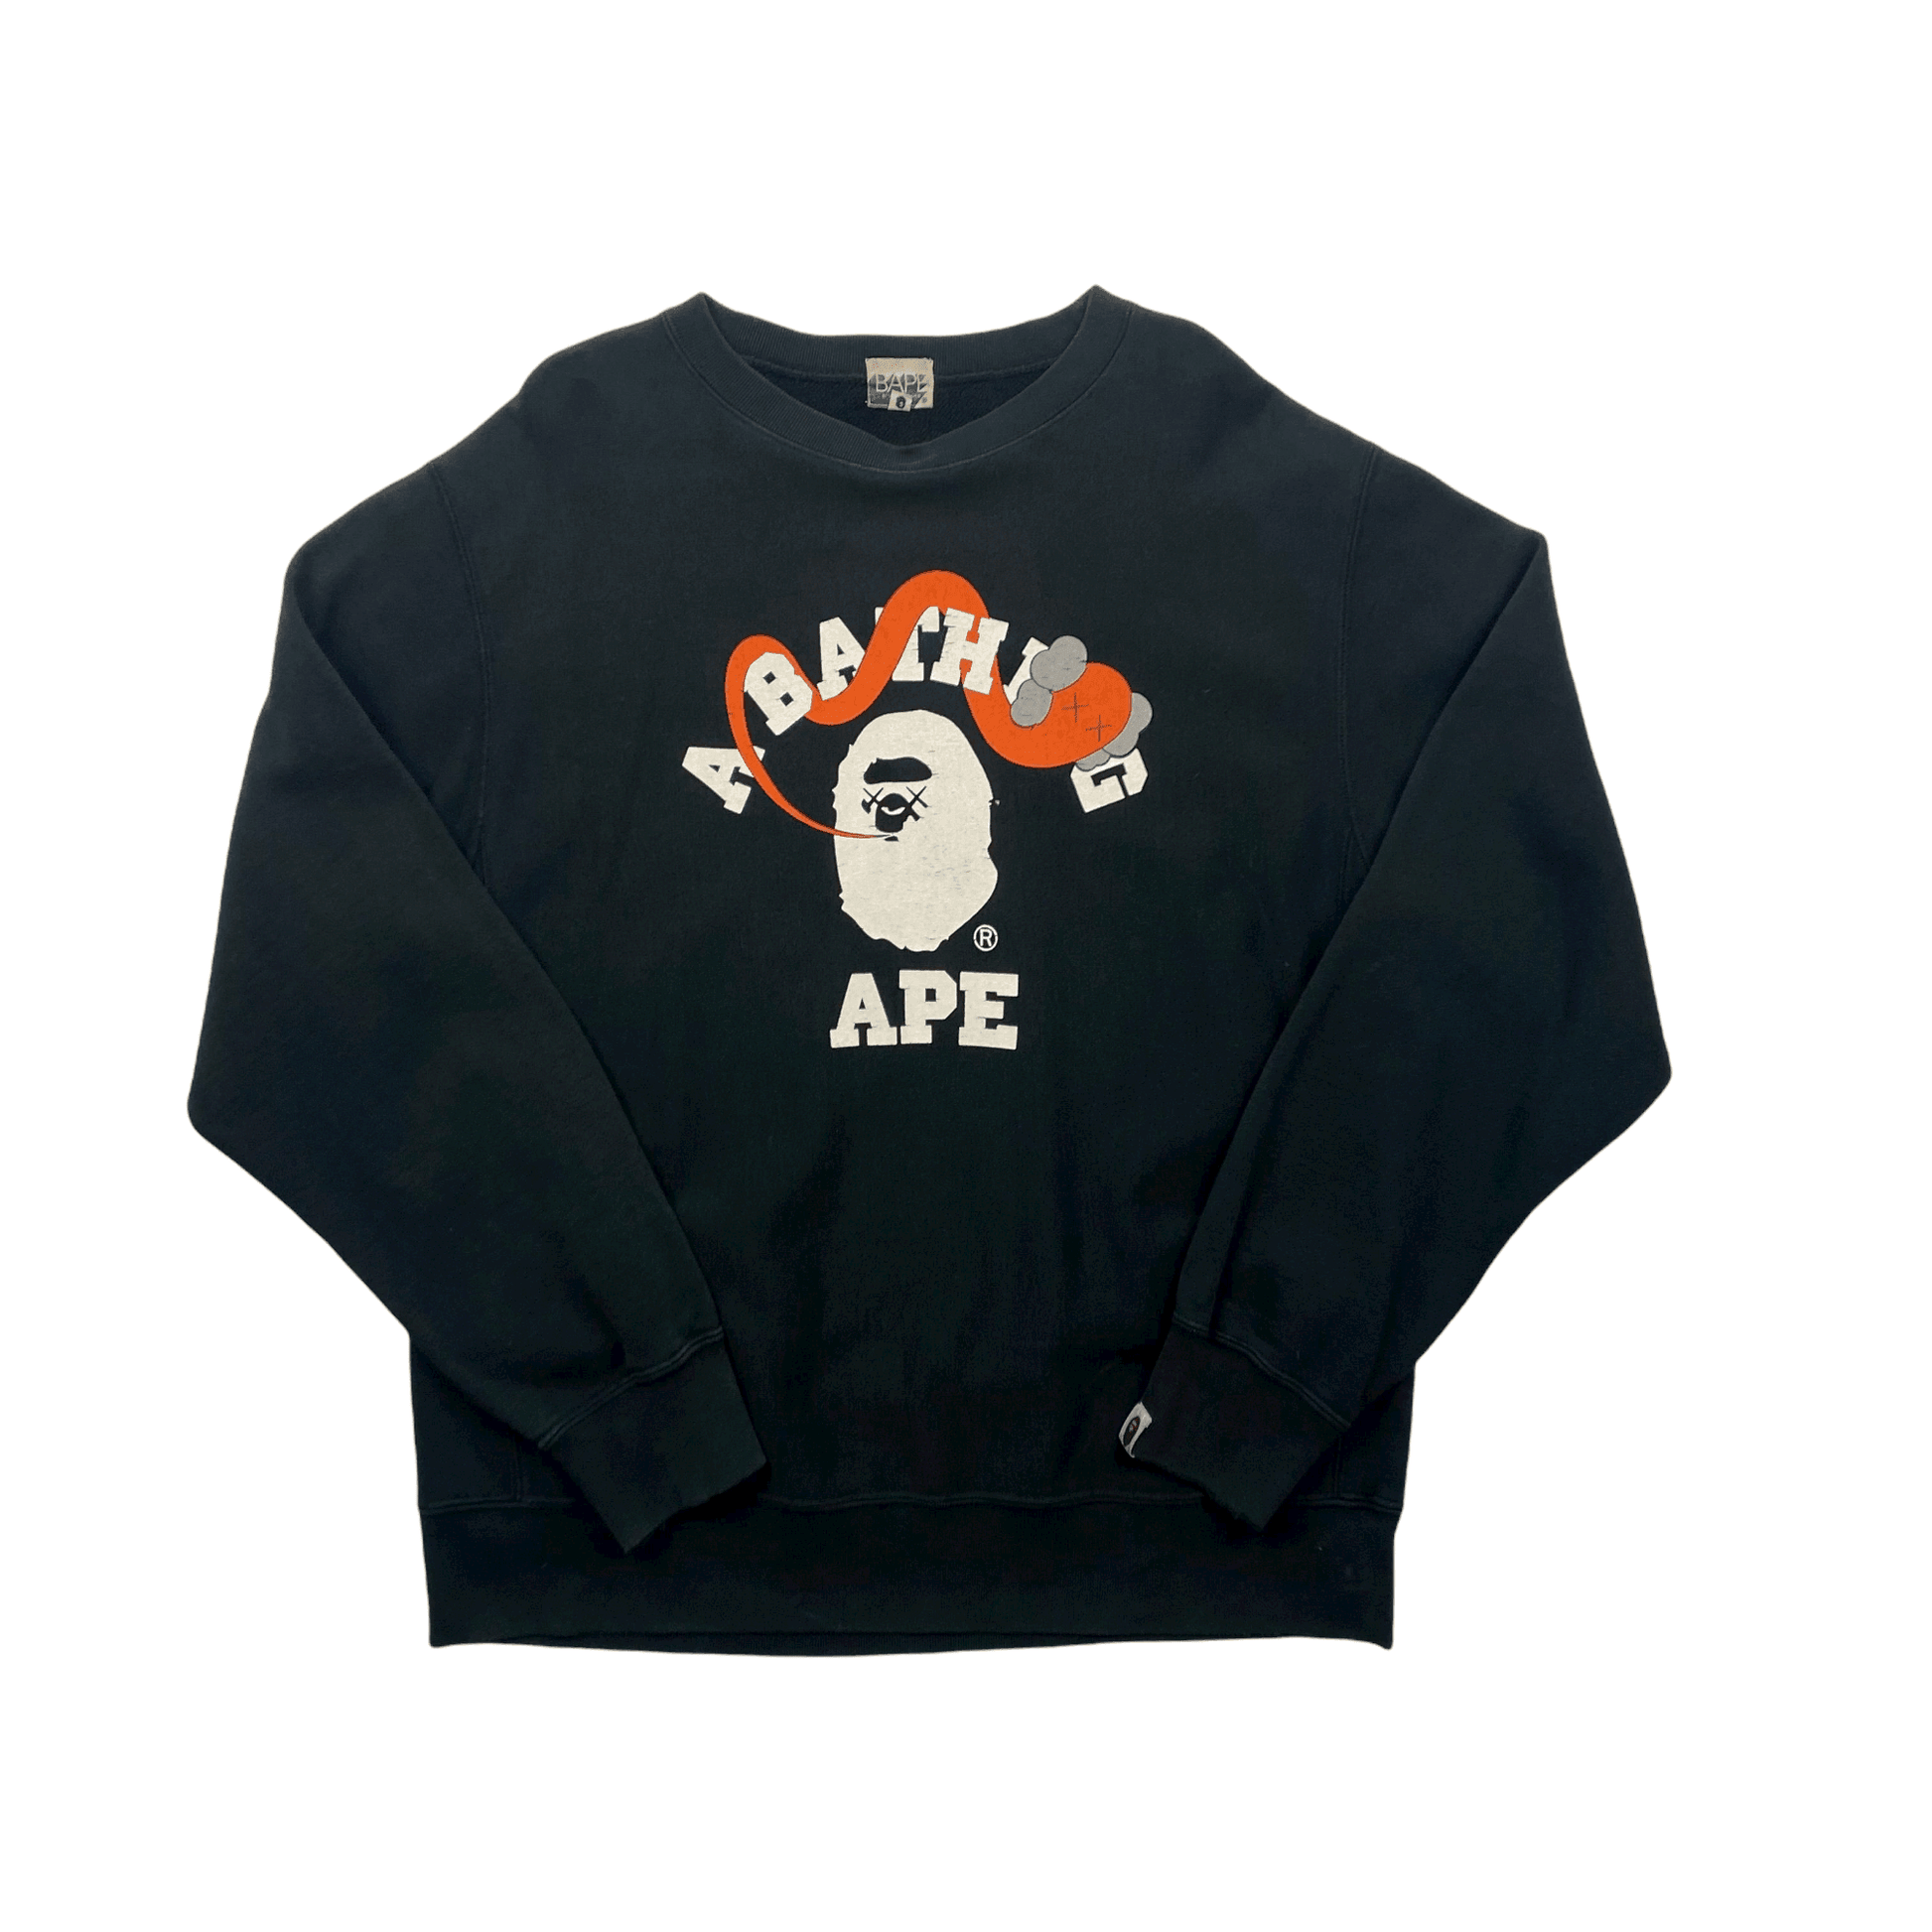 Vintage 90s Black A Bathing Ape (BAPE) x Kaws Sweatshirt - Medium - The Streetwear Studio